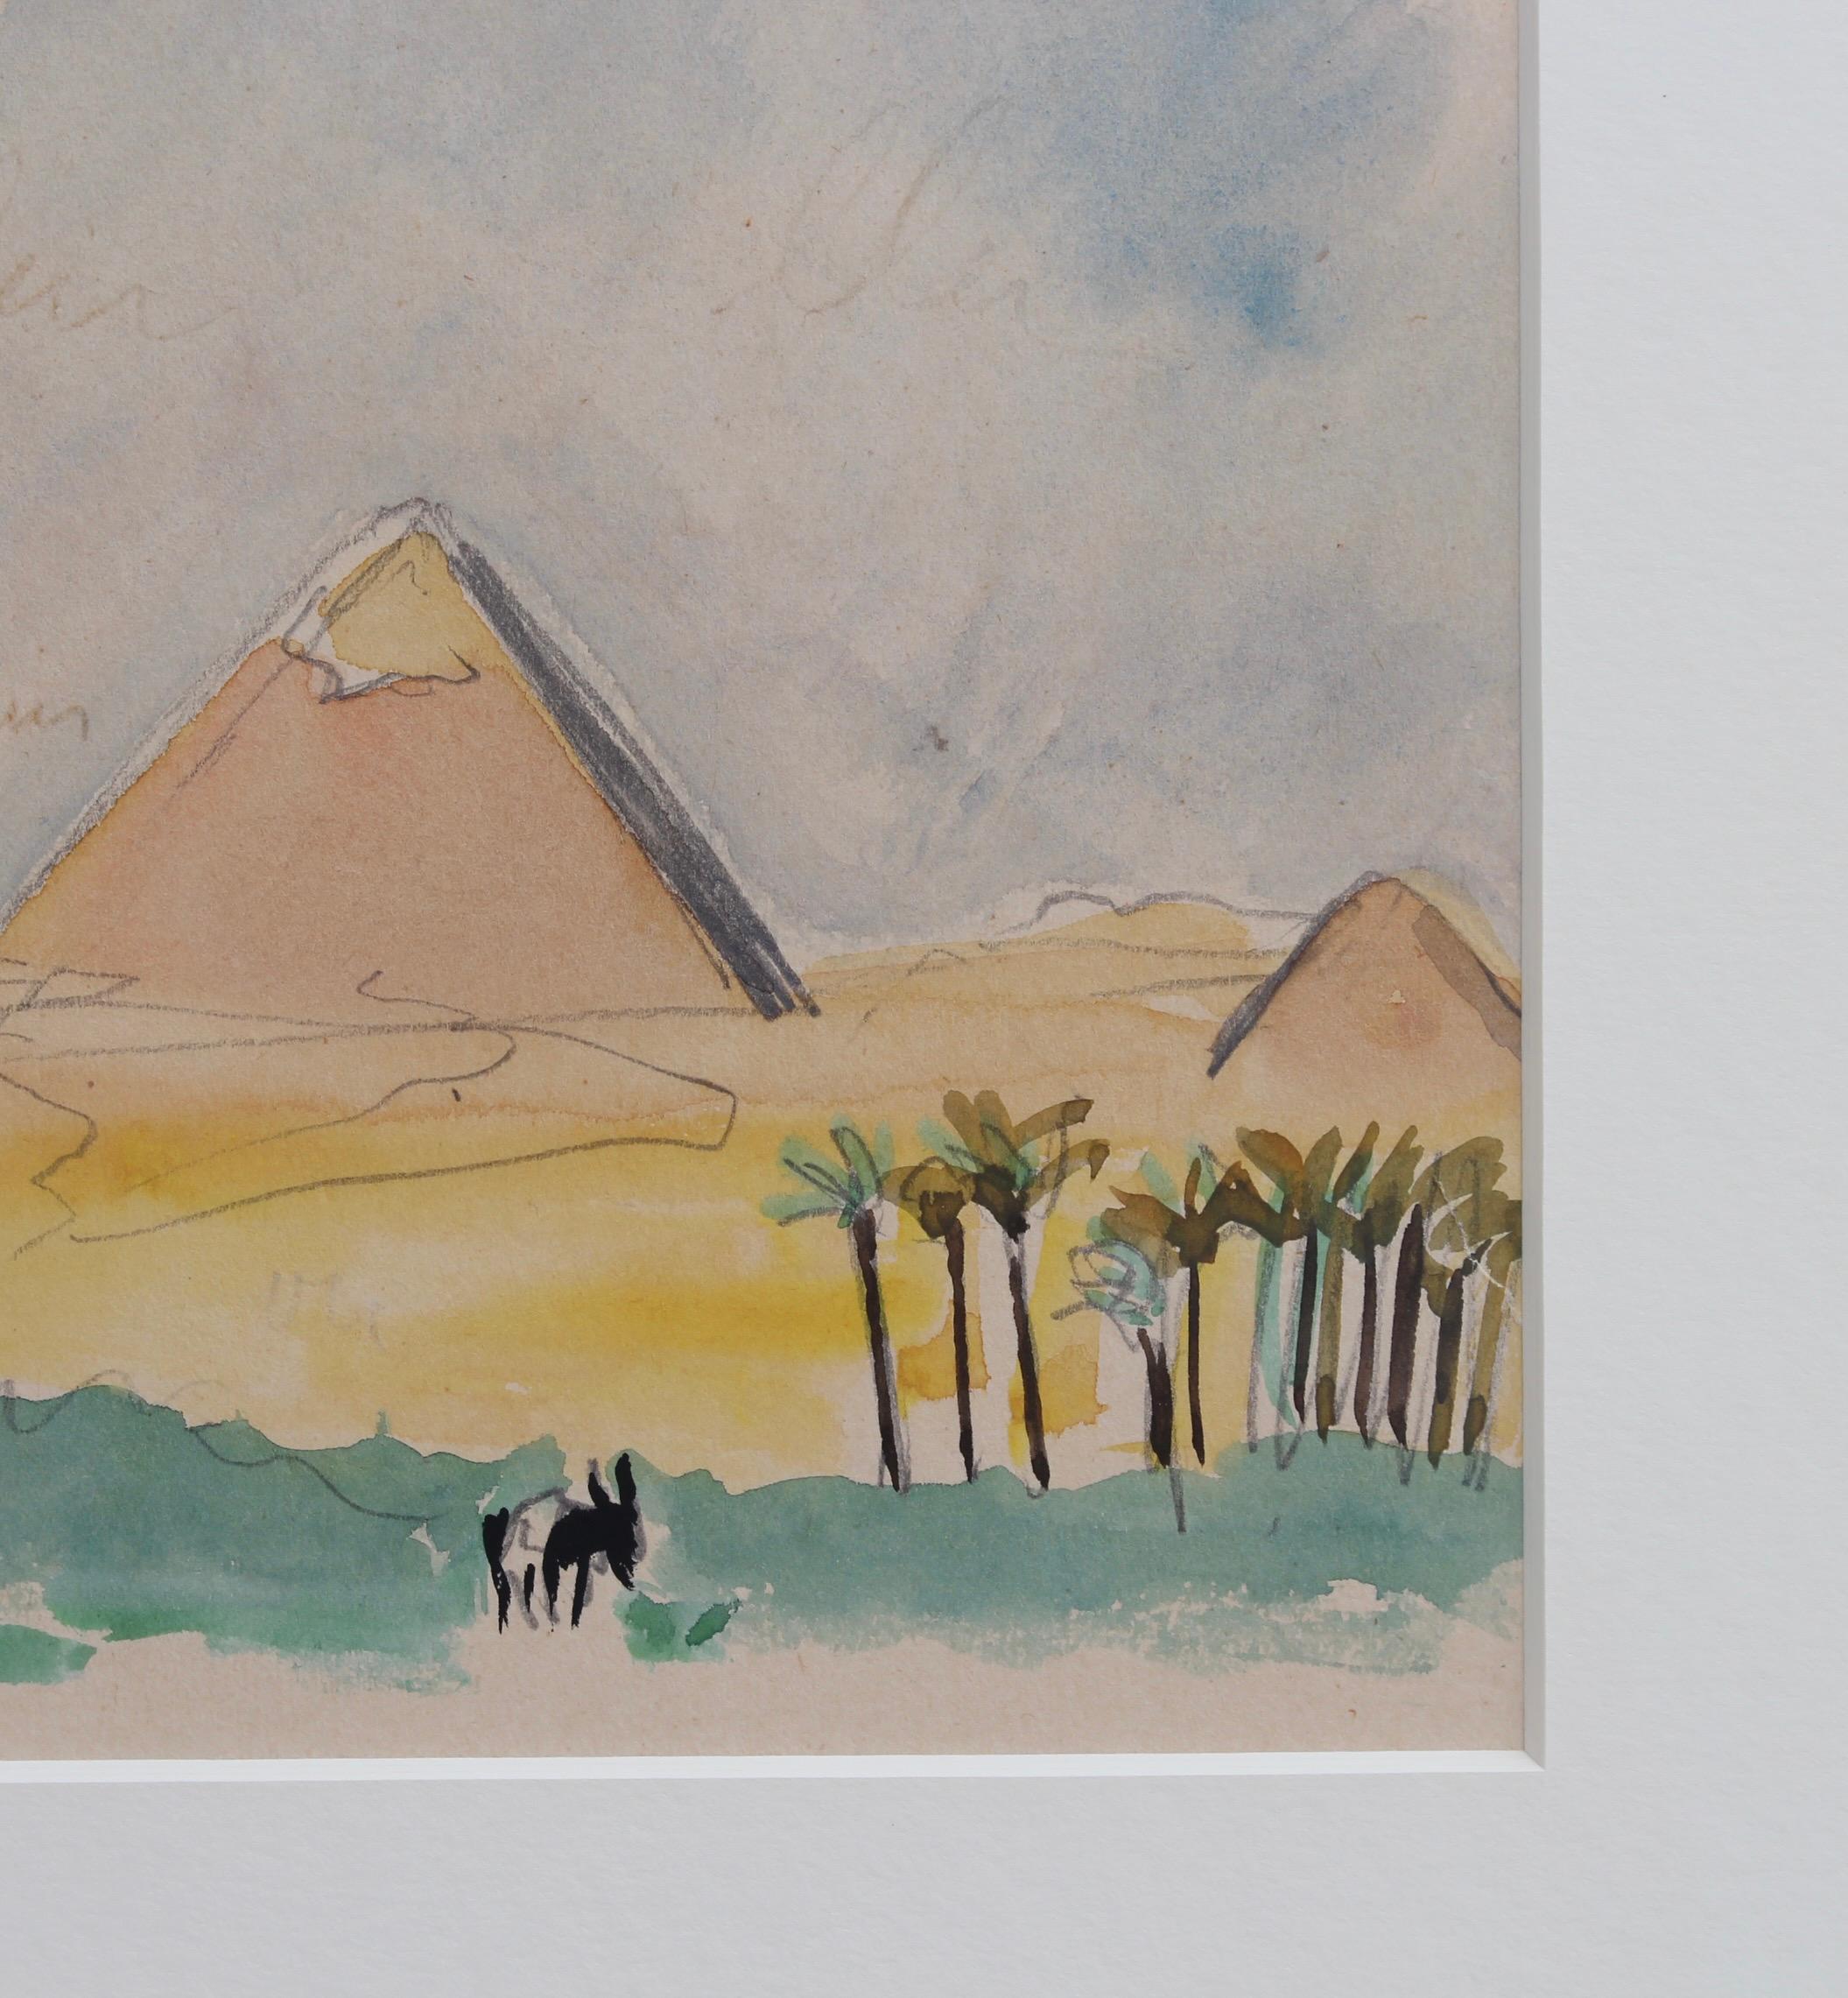 The Pyramids of Giza 1